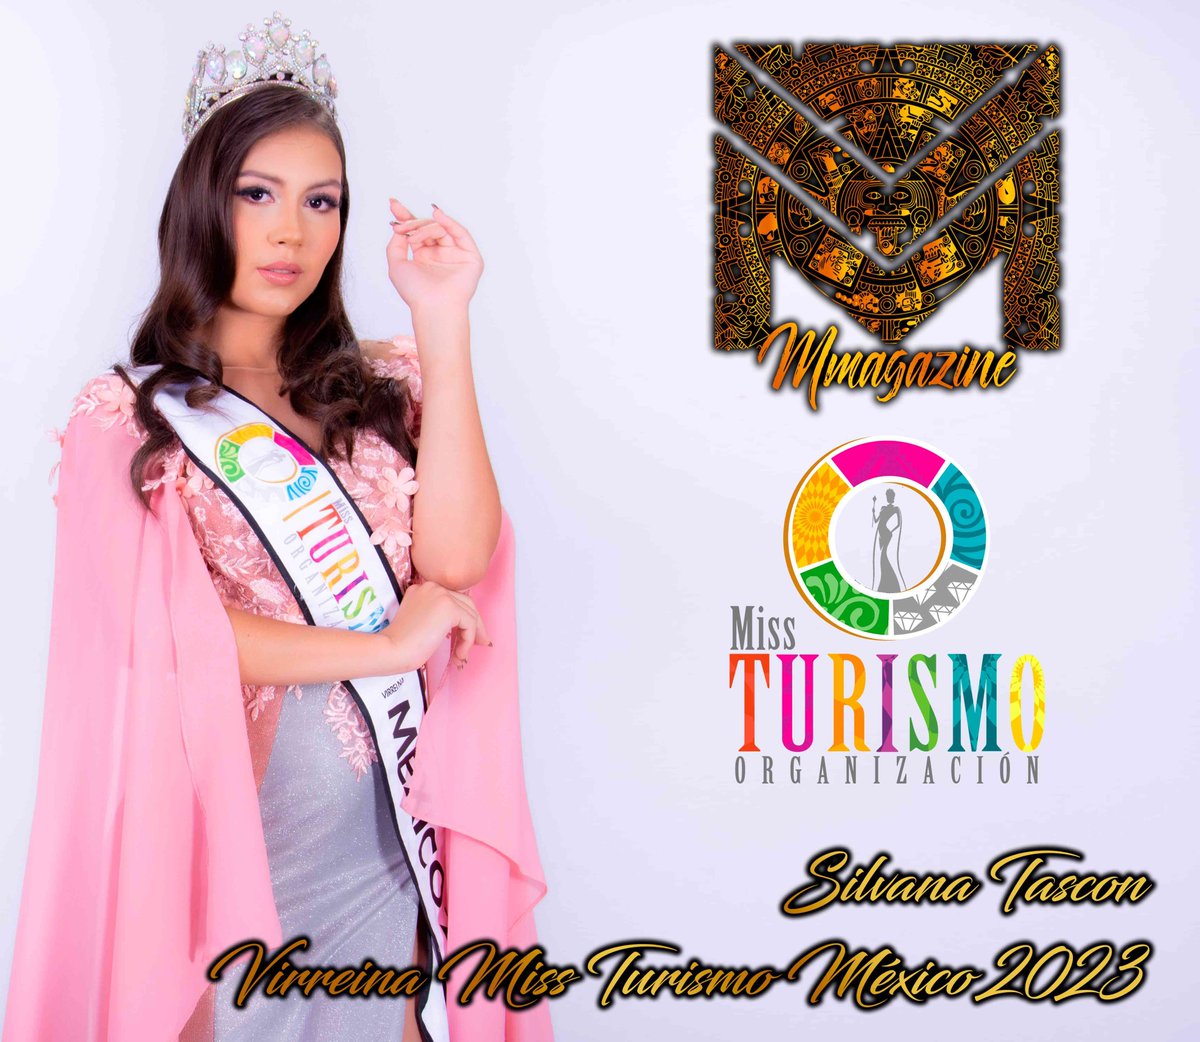 Ella es Silvana Tascon Virreina de Miss Turismo México 2023...

#Mmagazine #Homenajes #ReinadeBelleza #MissTurismoMexico